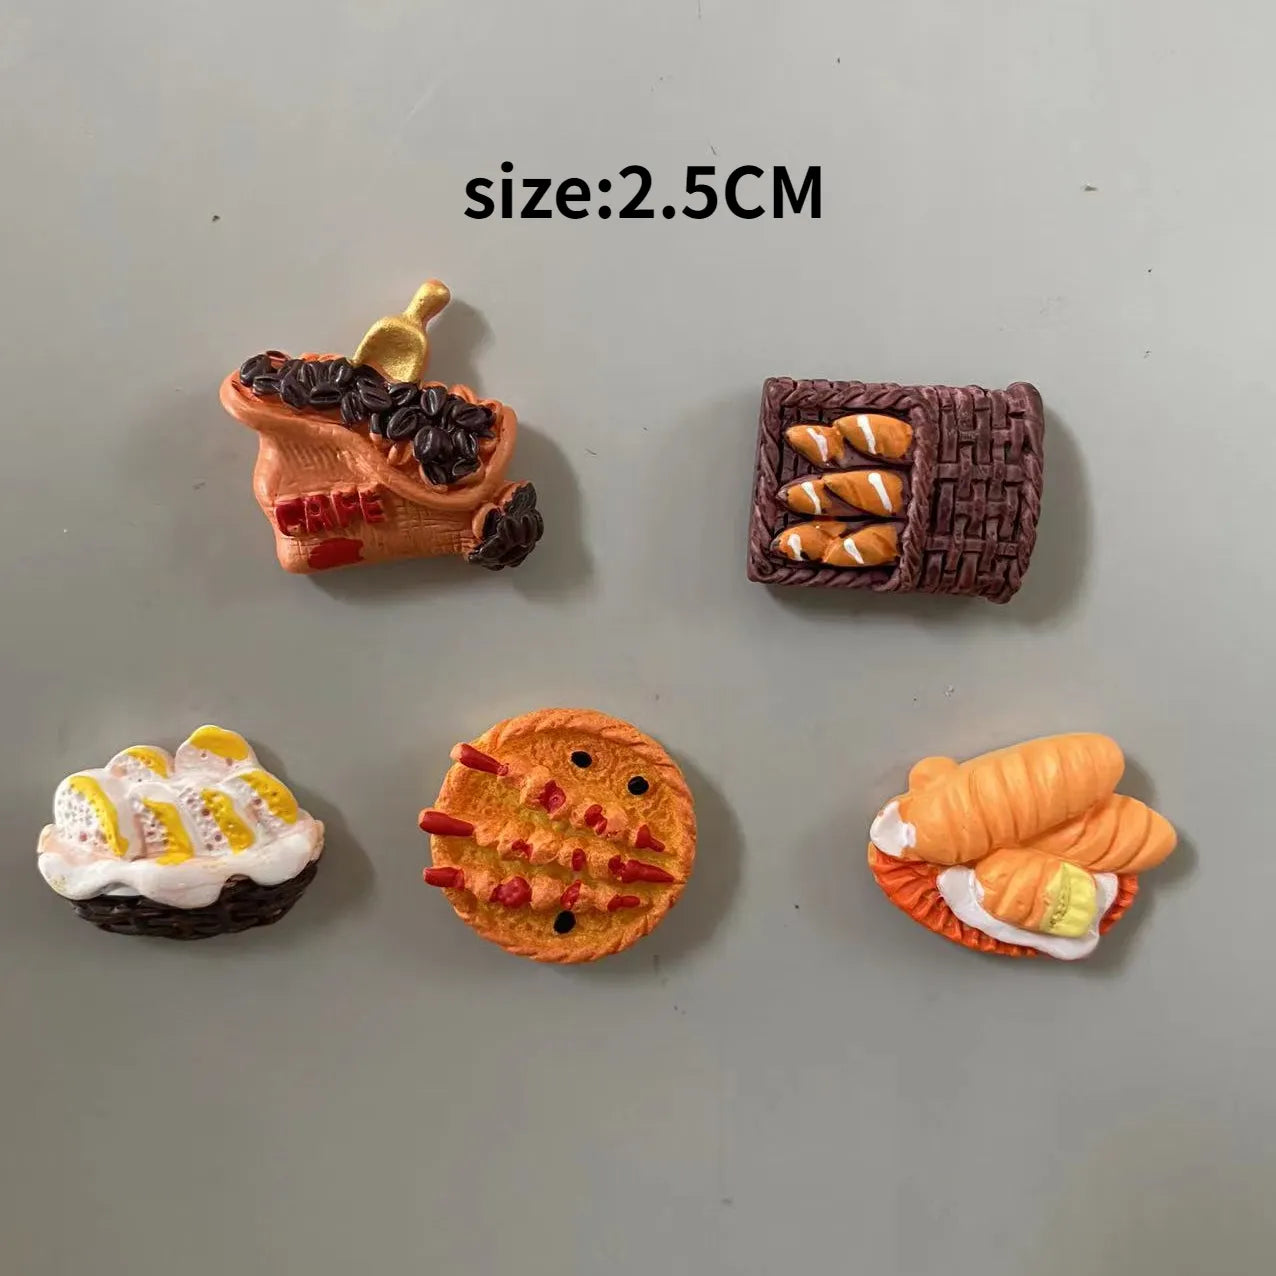 Simulation Food Magnets for Refrigerators